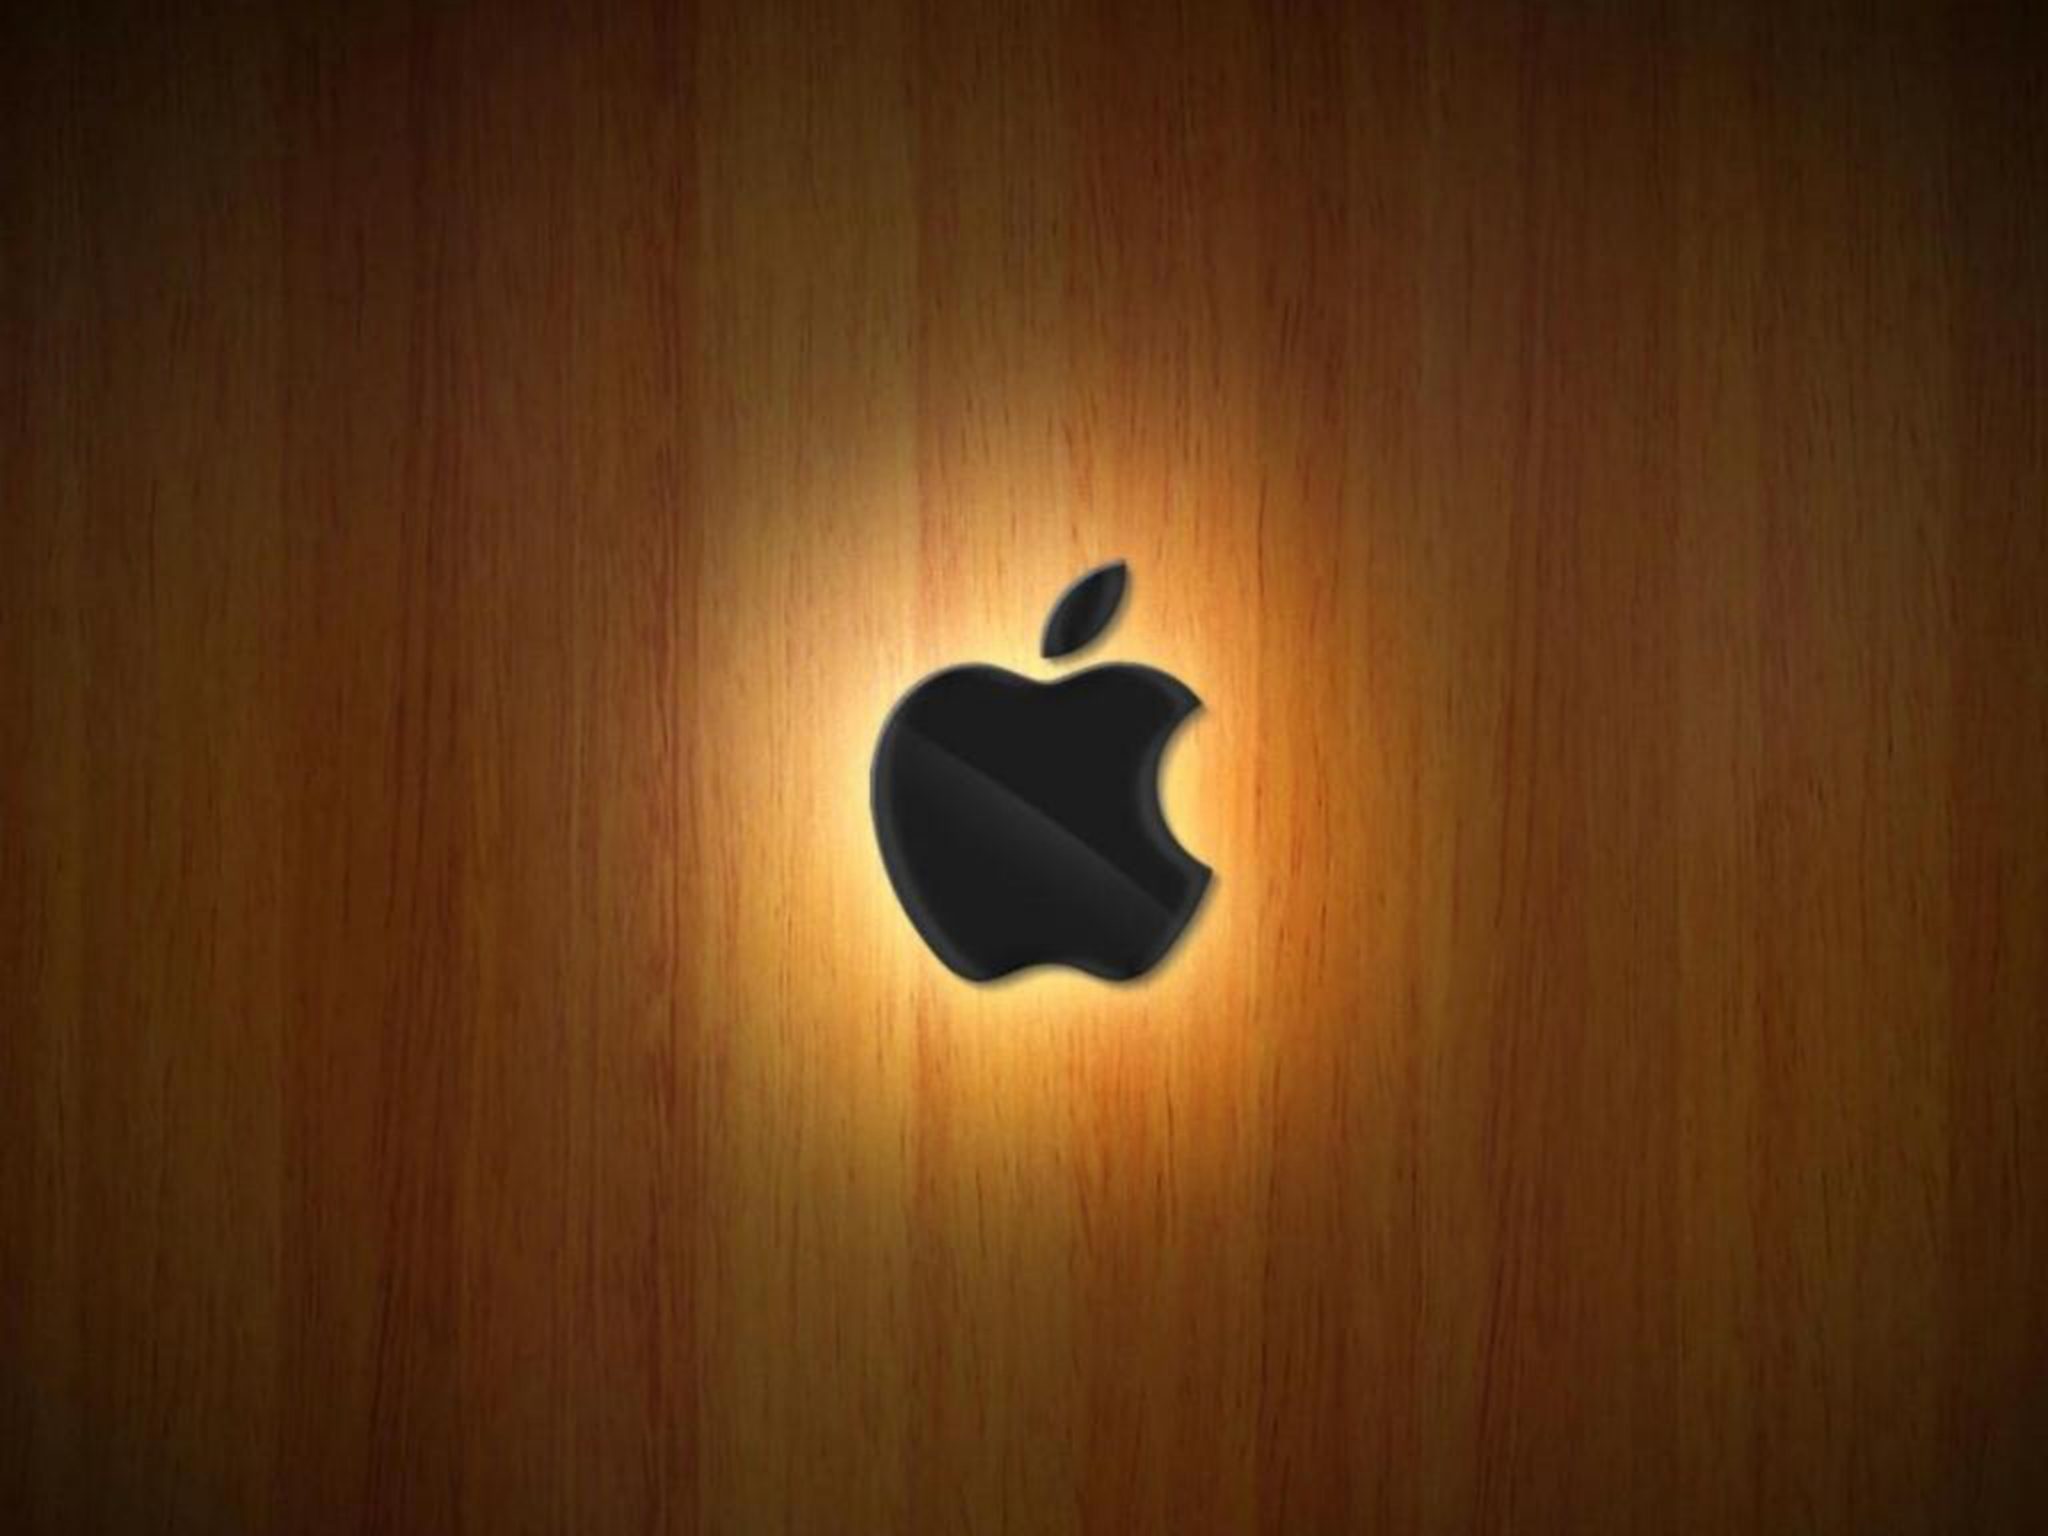 2048x1536 wallpaper Apple Logo Wood Ipad Wallpaper 2048x1536 pixels resolution